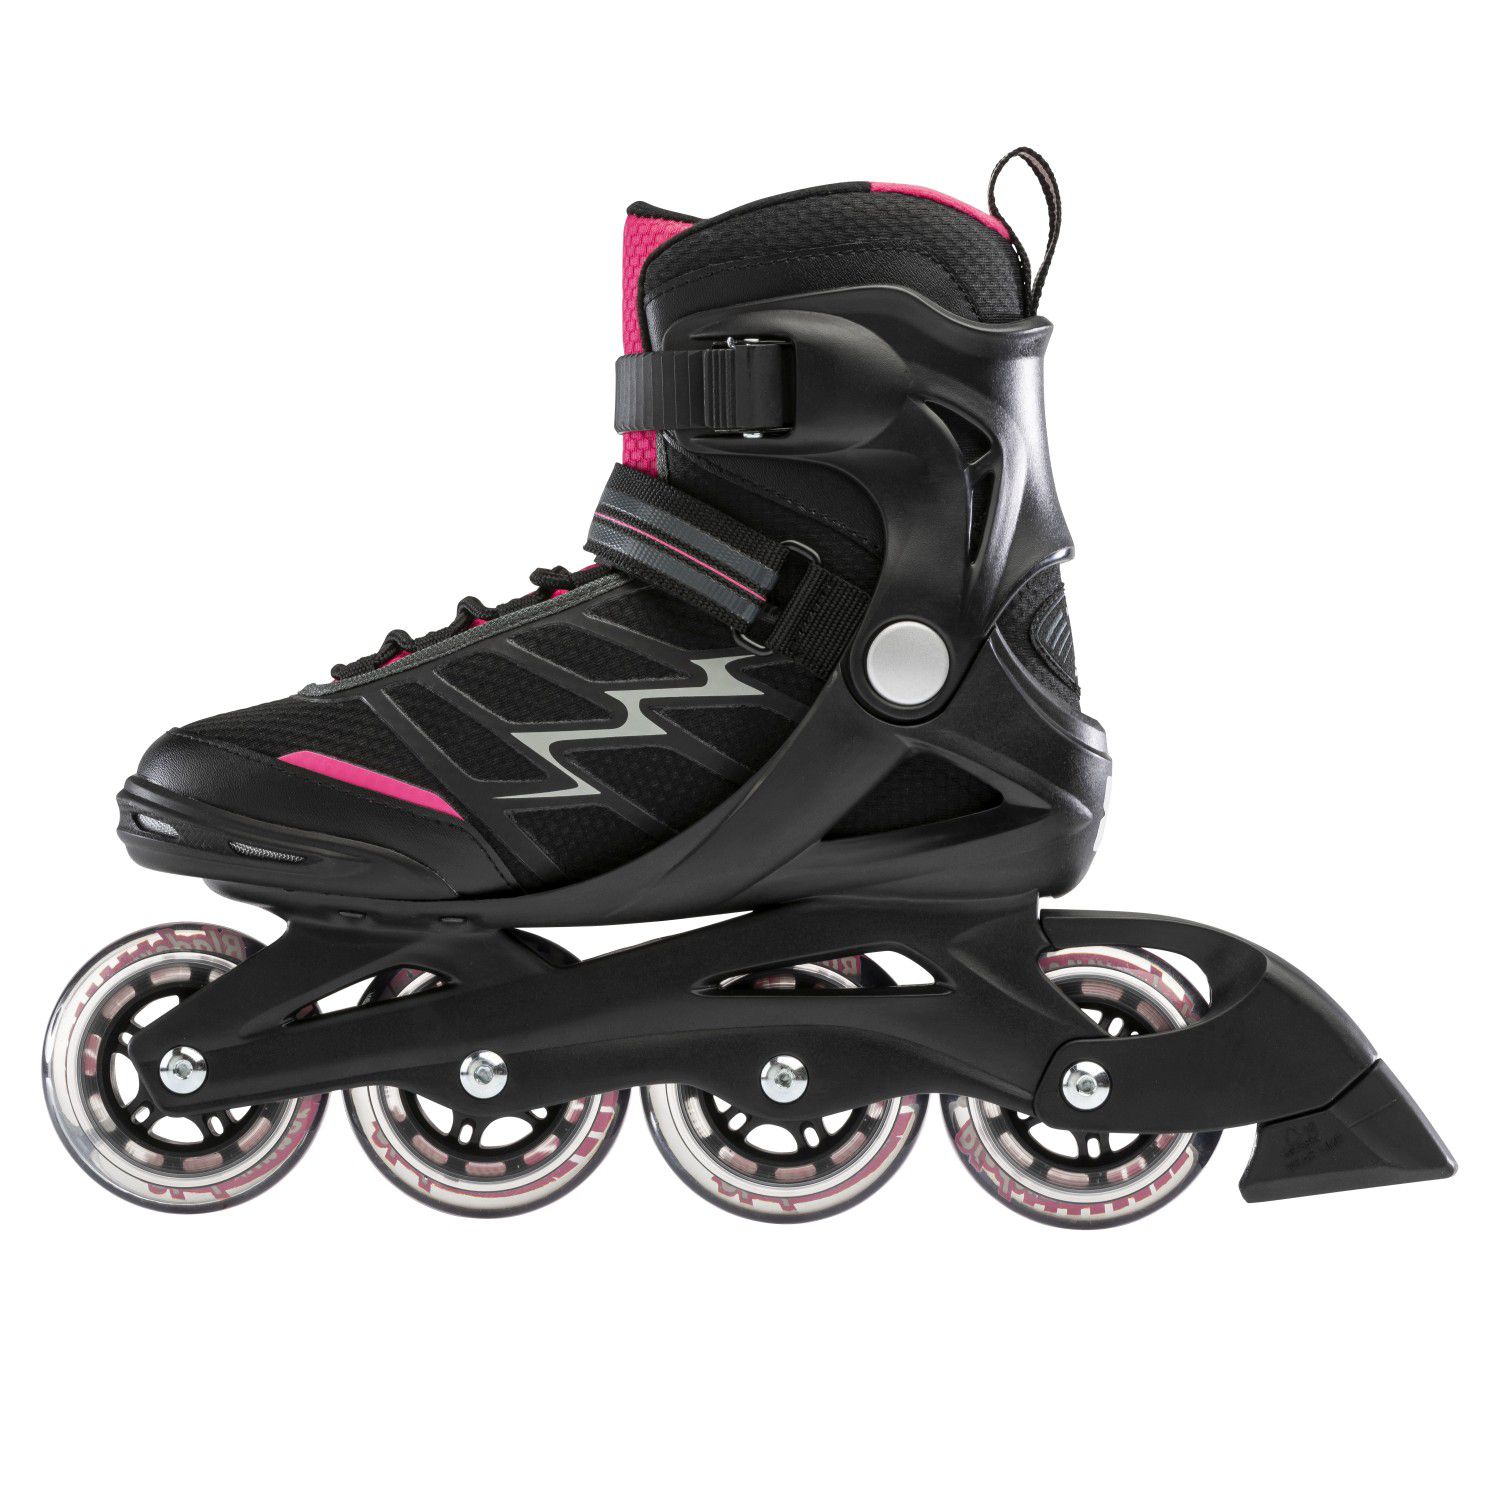 Skate Rollerblade Advantage Pro Xt W